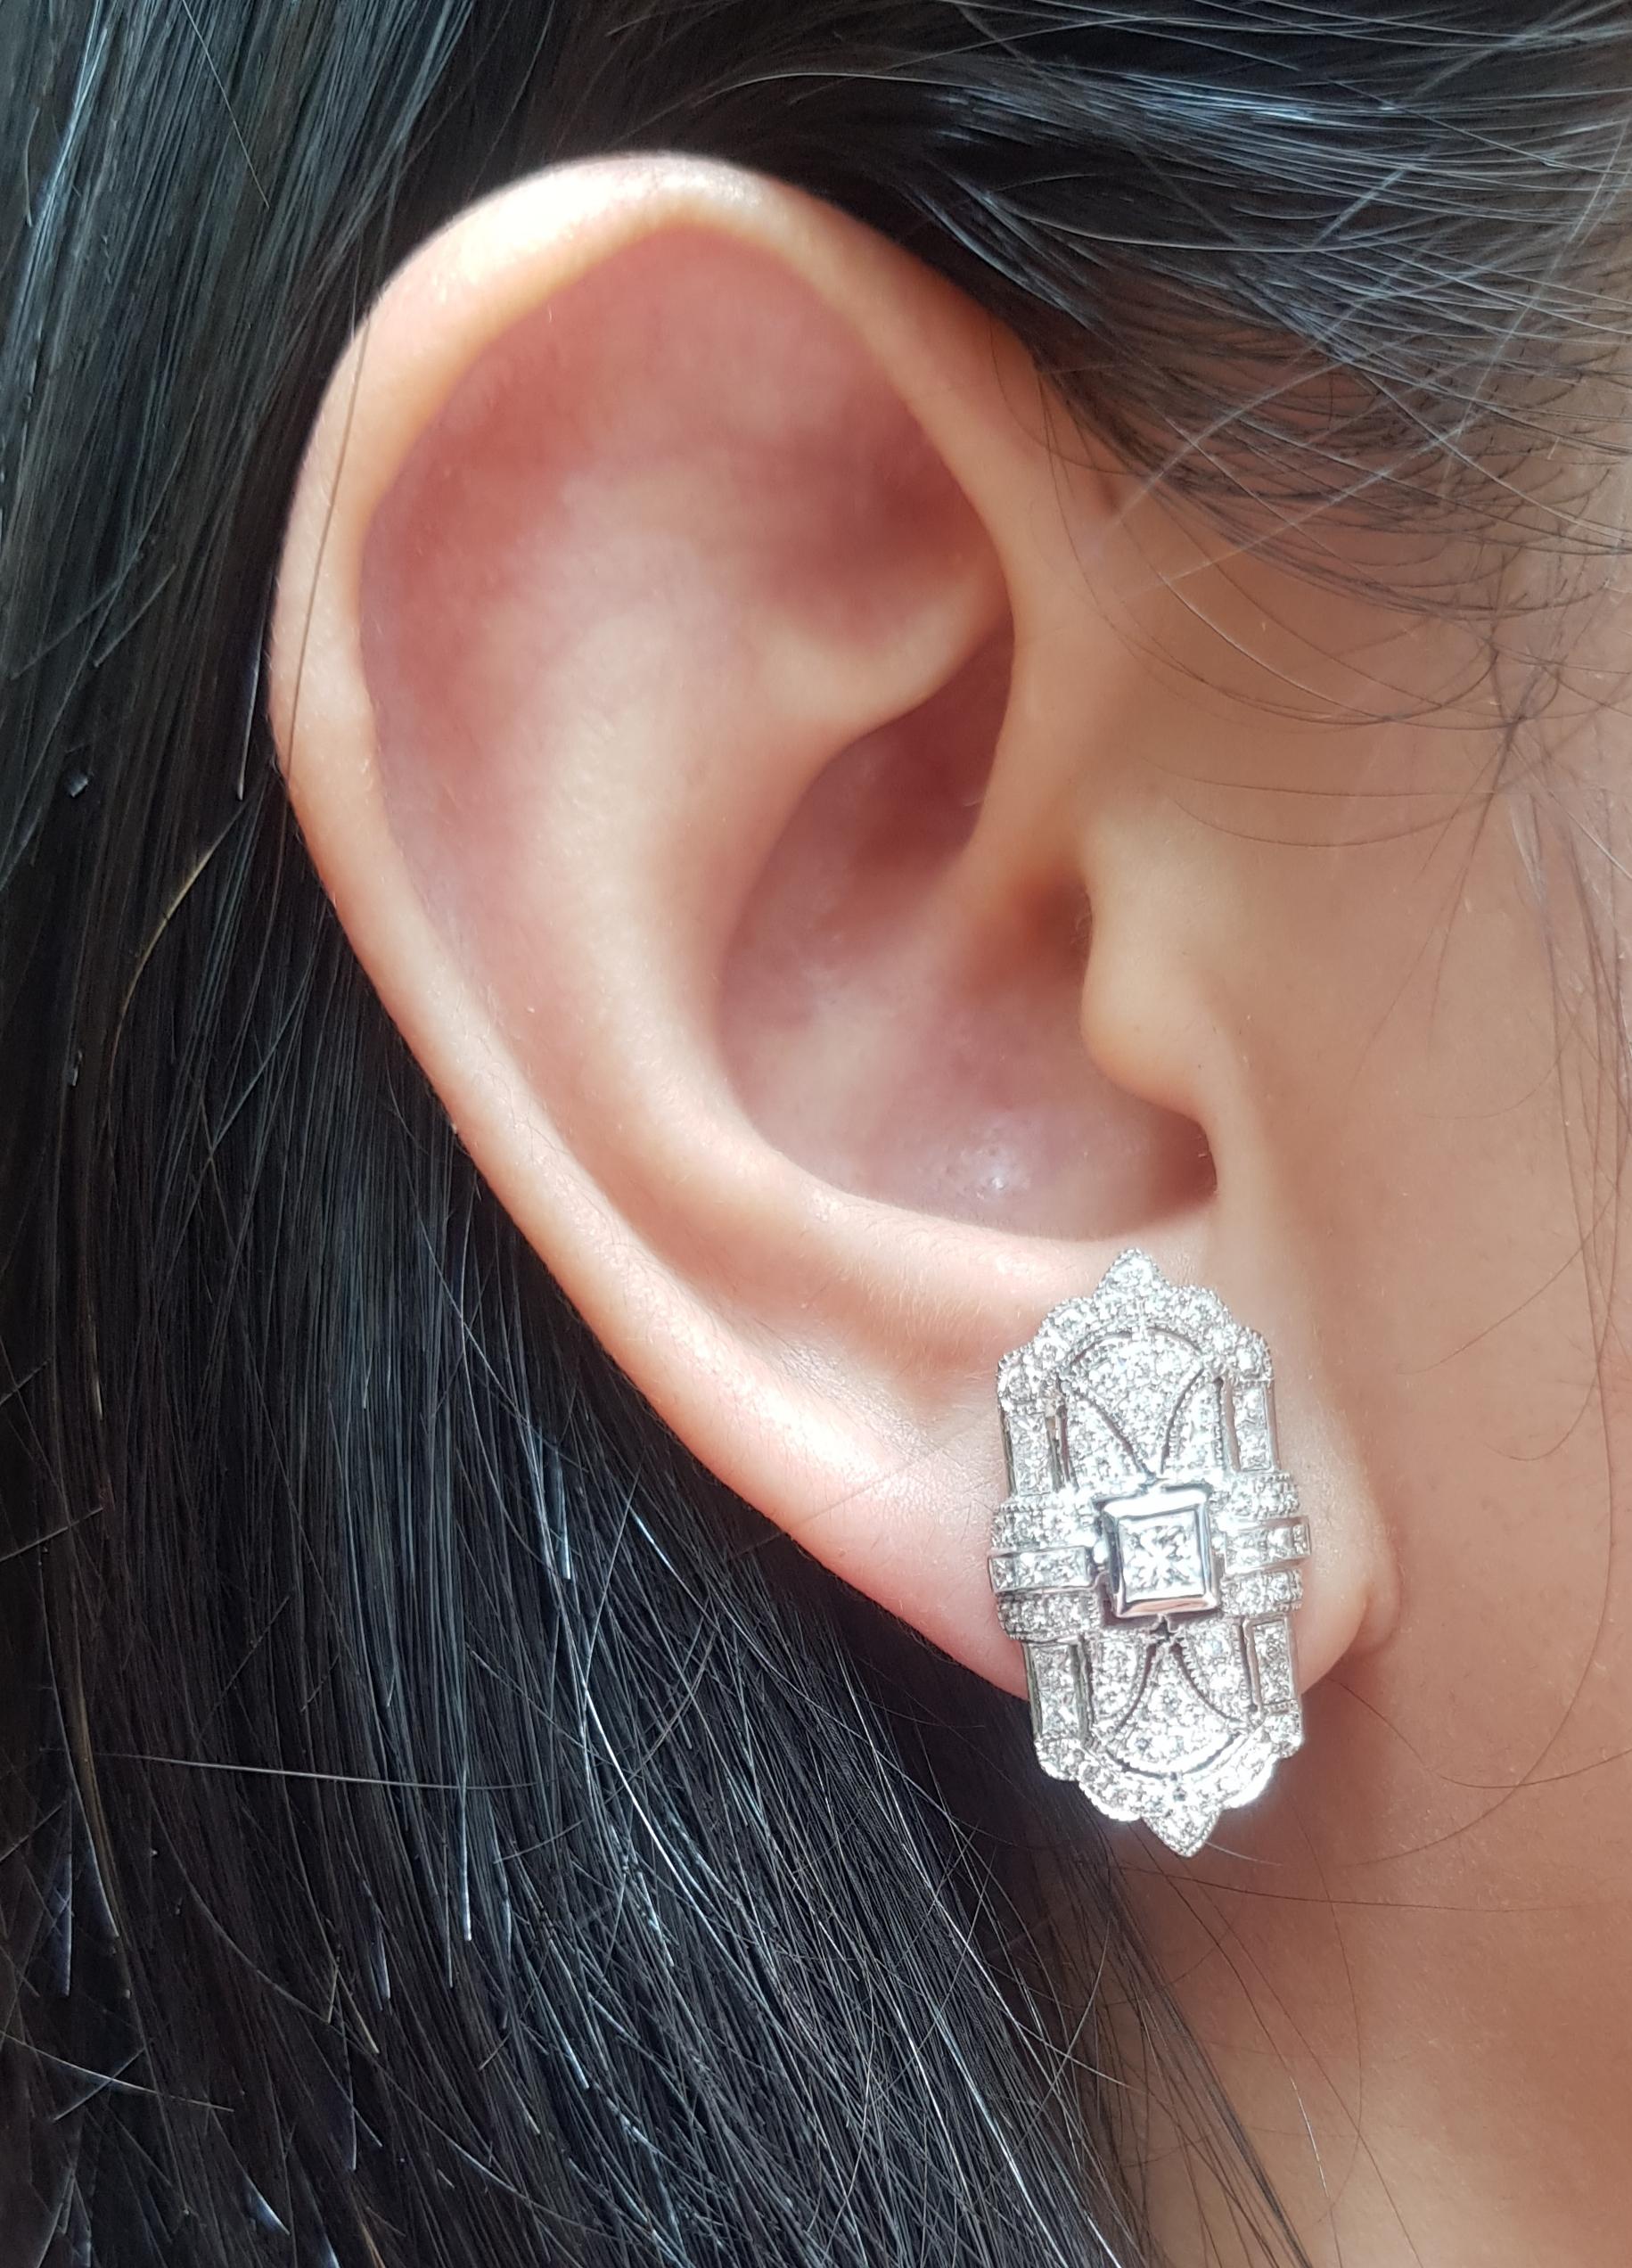 Diamond 1.6 carats Earrings set in 18 Karat White Gold Settings

Width:  1.3 cm 
Length: 2.3 cm
Total Weight: 8.68 grams

